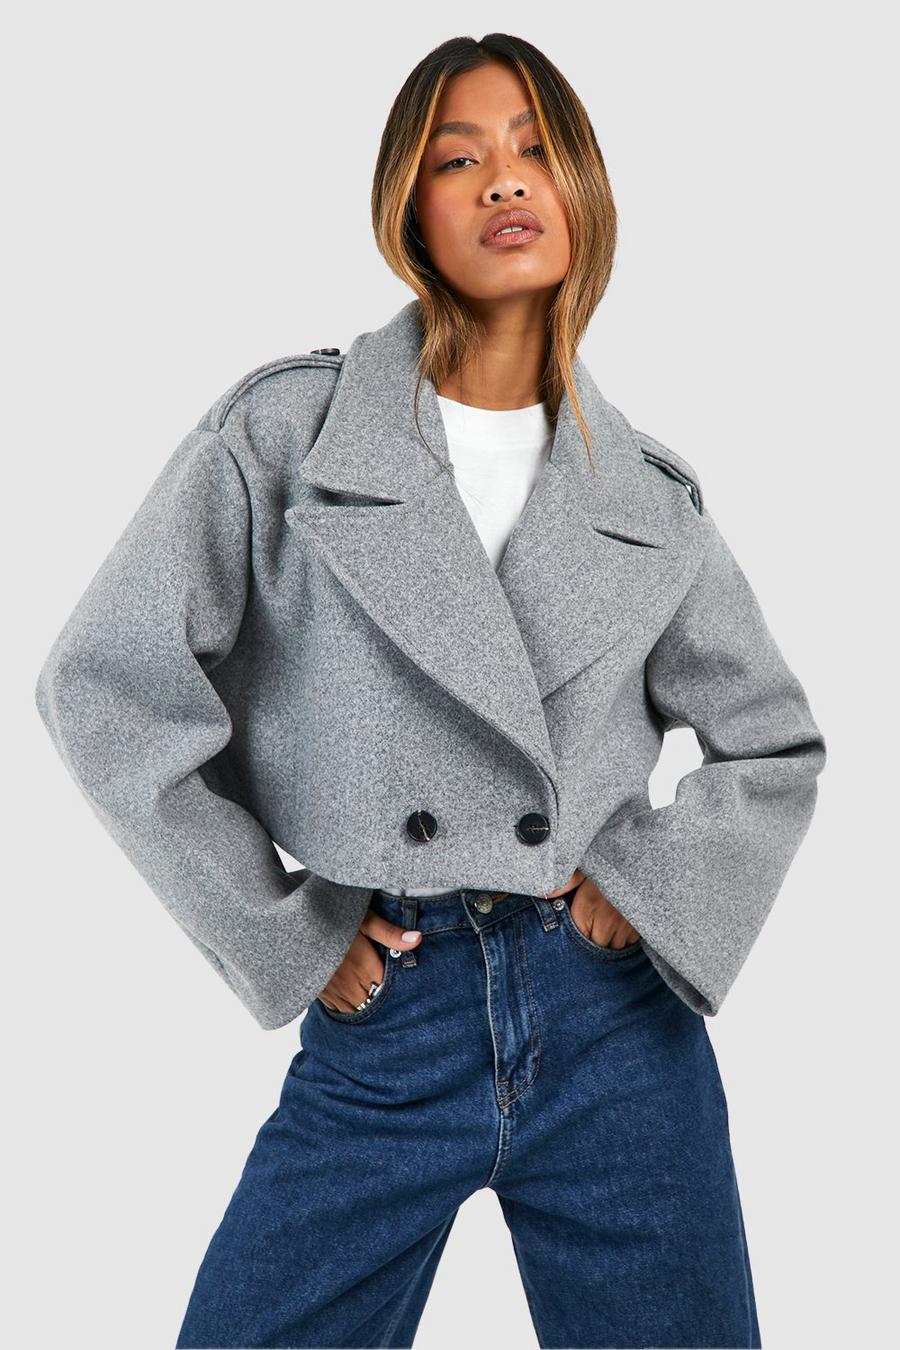 Womens Grey Coats, Long & Short Grey Coats